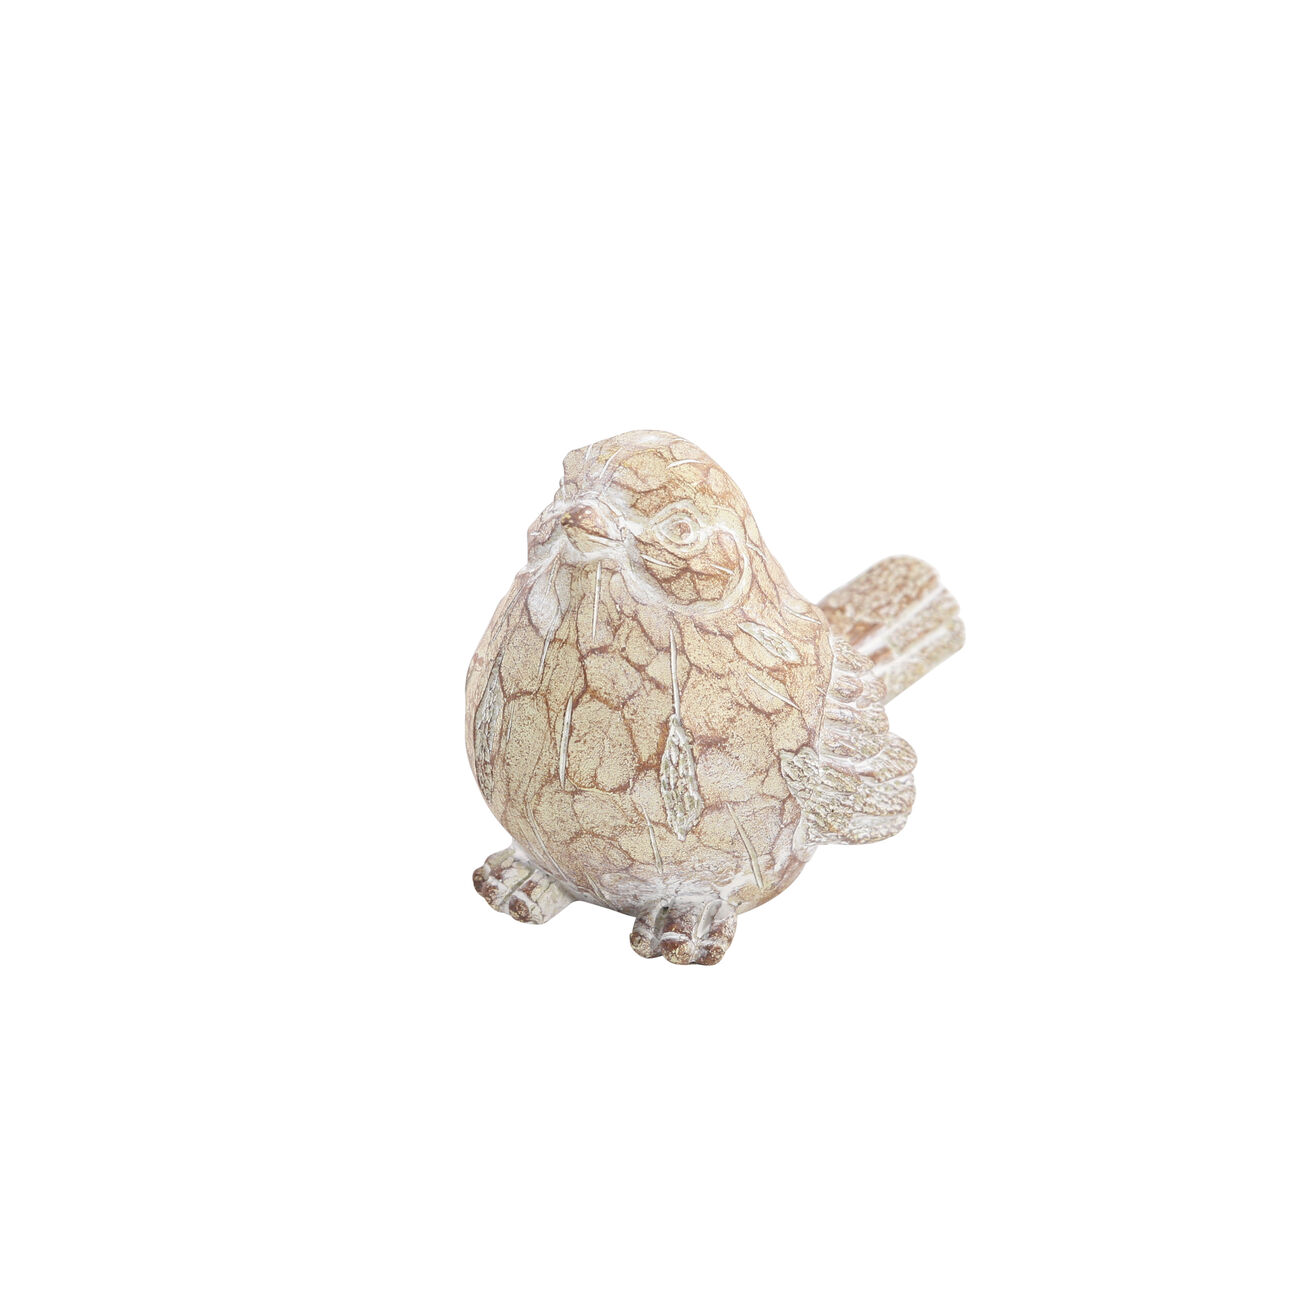 PolyresinDecorative Bird Figurine with Distressed Details, Brown